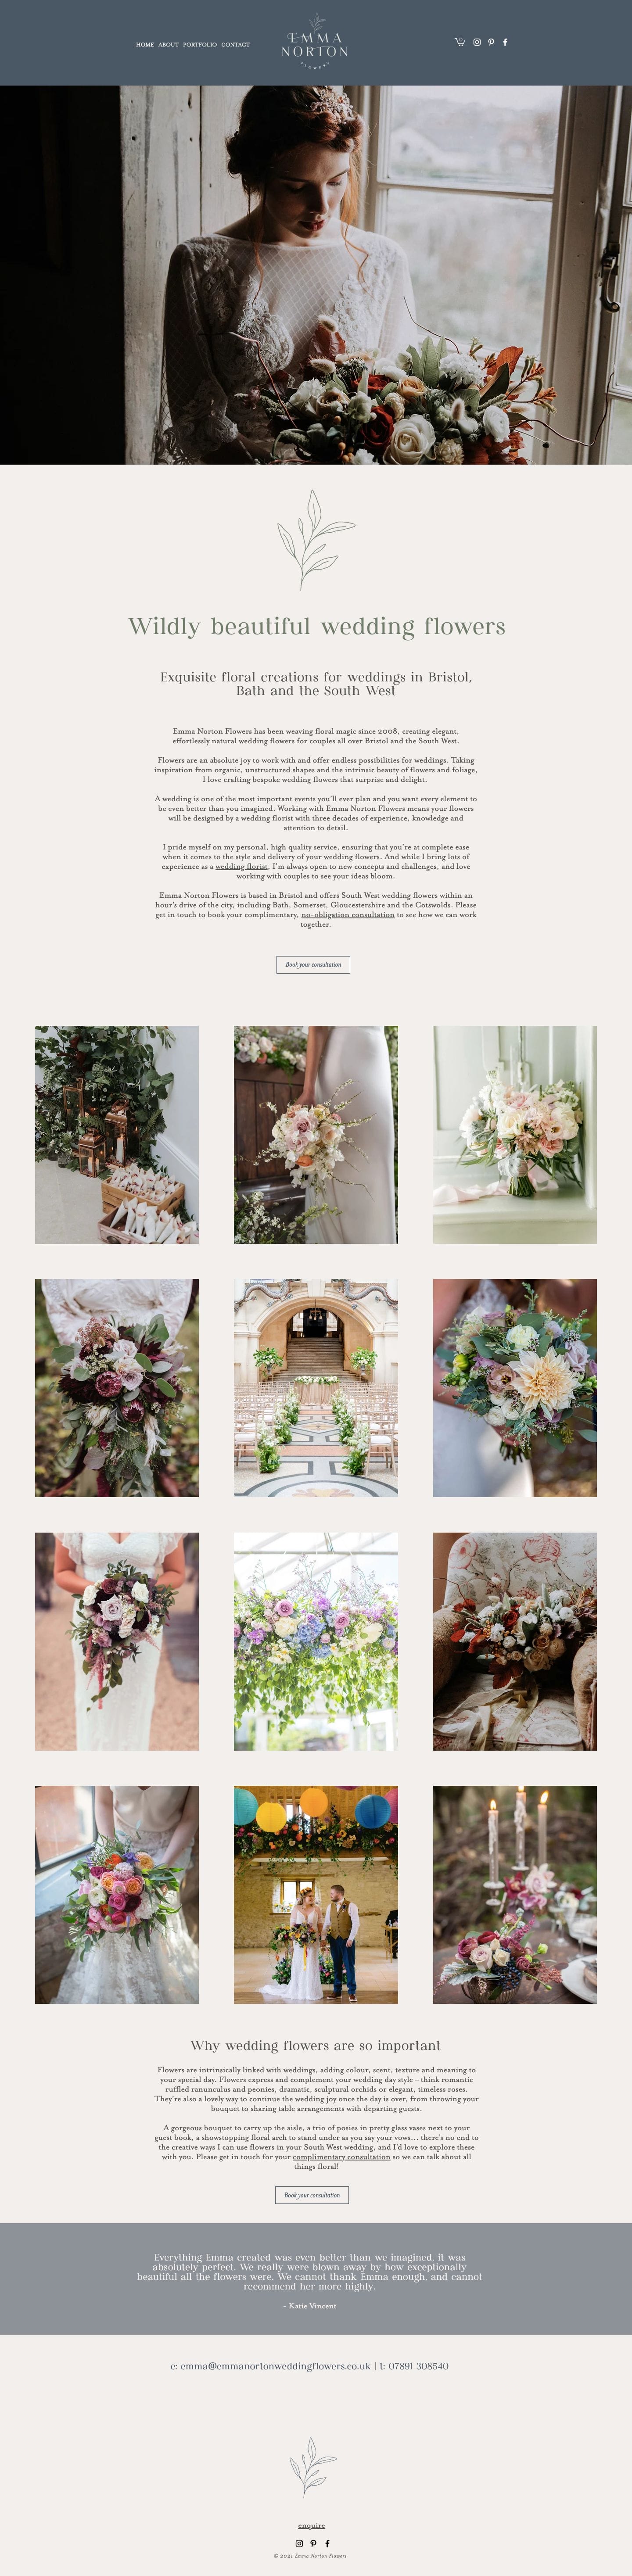 Emma Norton wedding florist websites